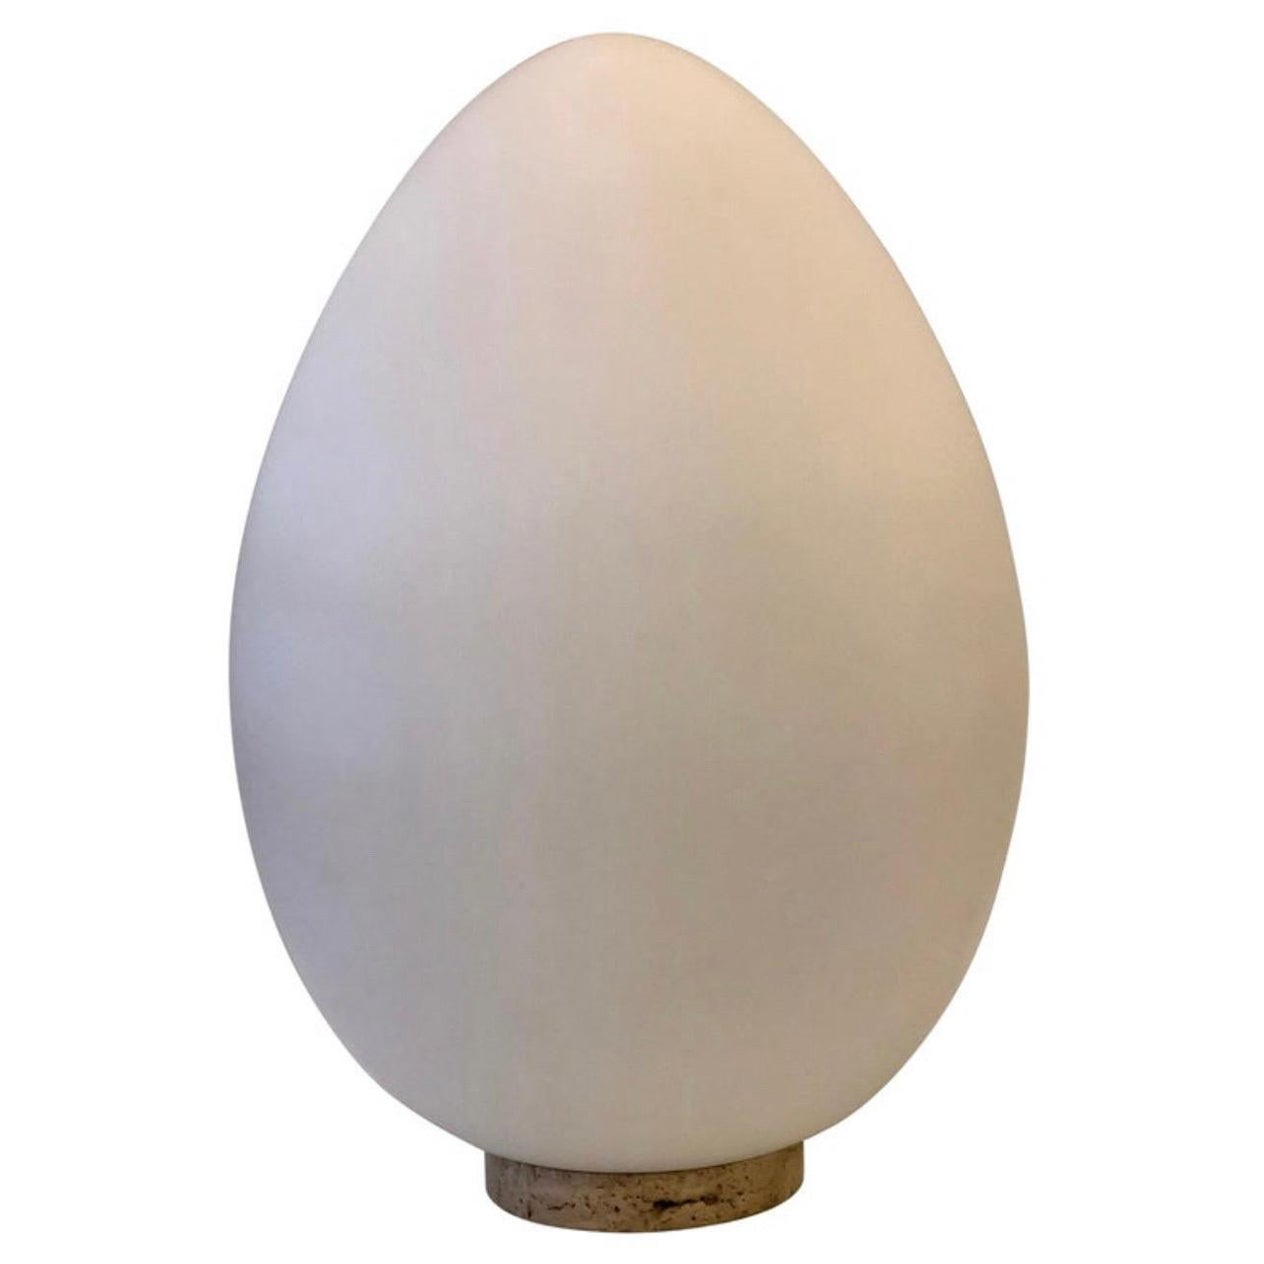  Large Massive Italian Glass Egg Lamp on Travertine Base by Ben Swildens For Sale